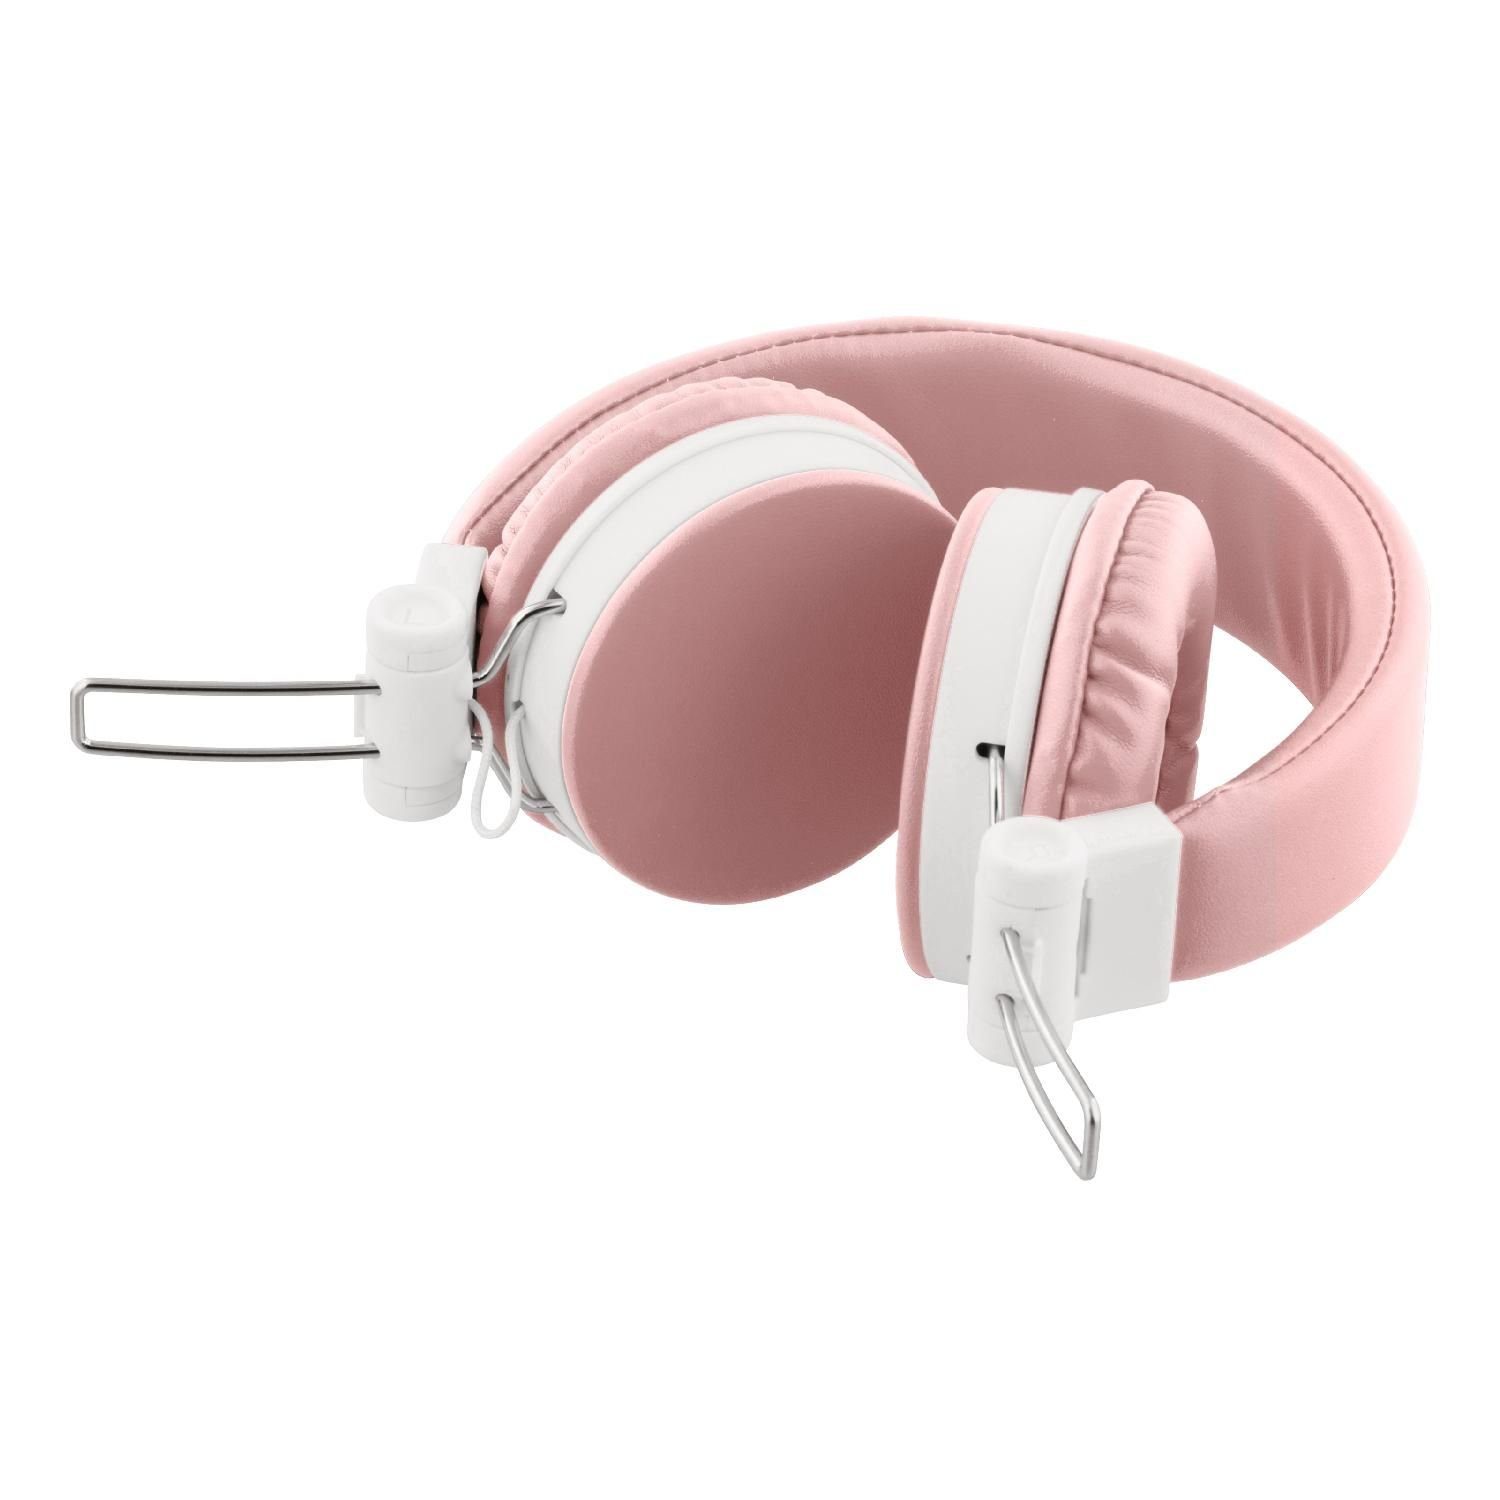 Headset, pink On-Ear-Kopfhörer / 5 STREETZ Kopfhörer 1,2m (integriertes faltbares Herstellergarantie) Kabel inkl. Klinkenanschluss 3.5mm Mikrofon, Ohrpolster rosa, Jahre